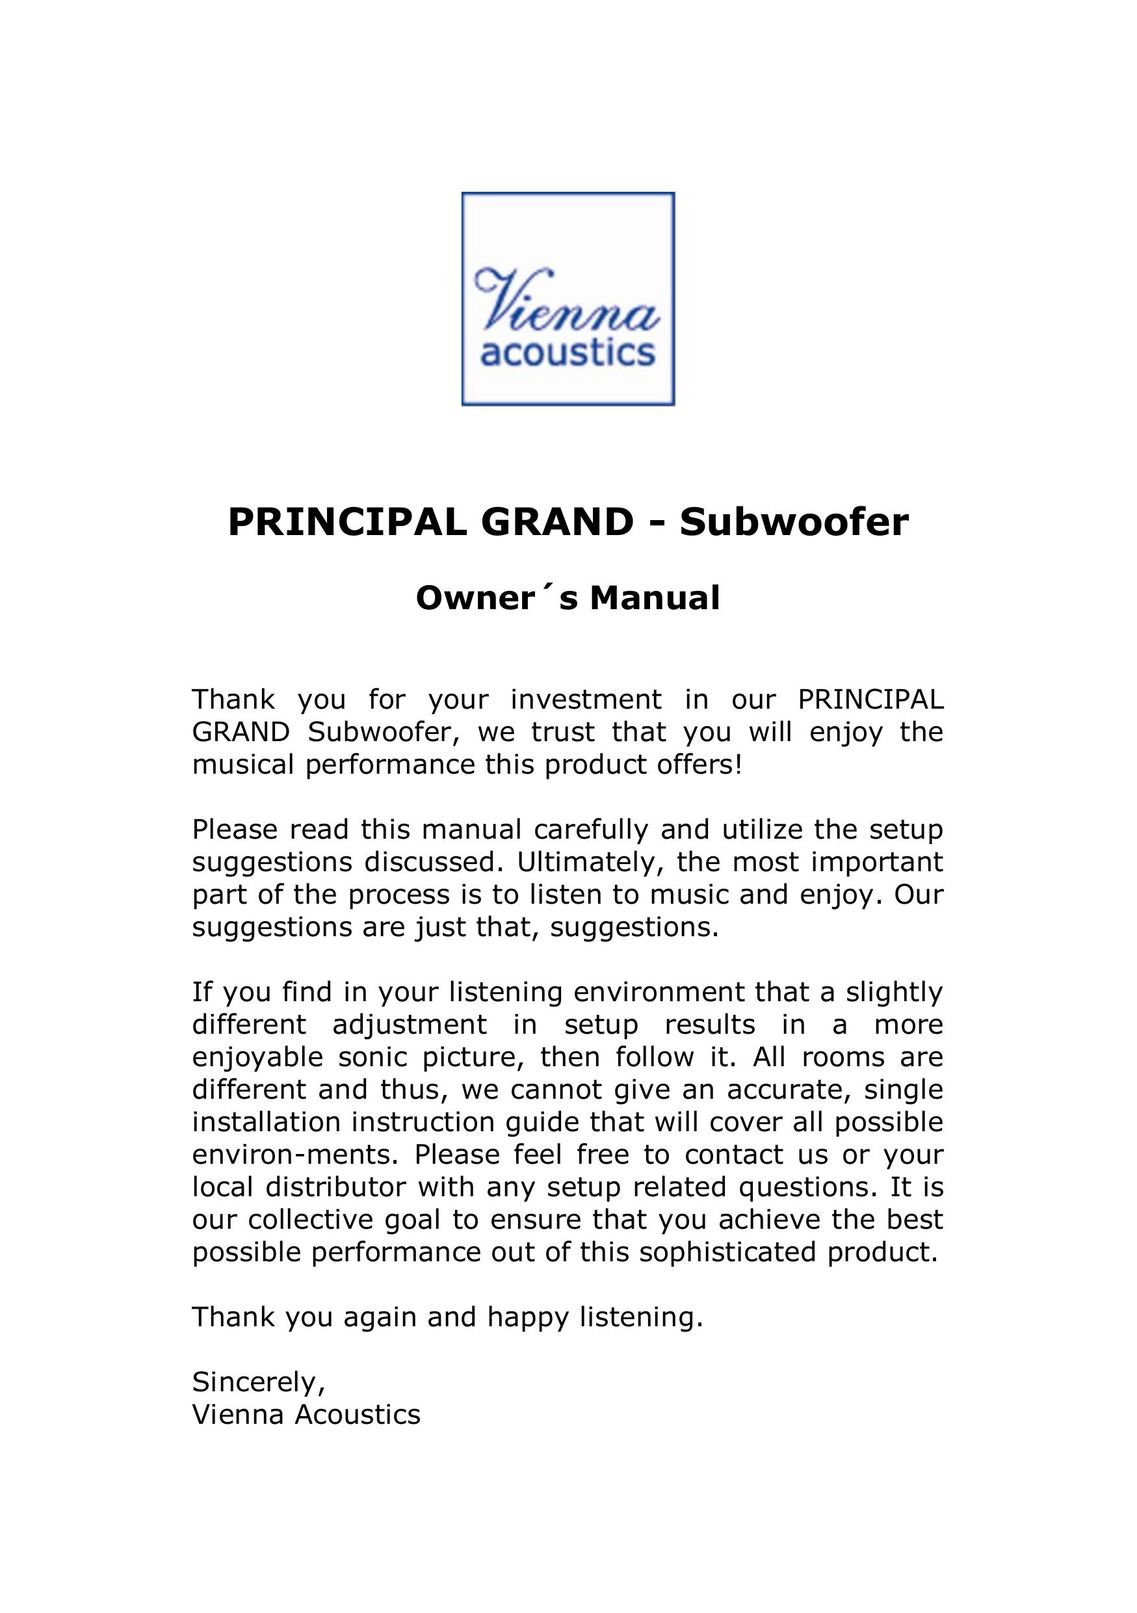 Vienna Acoustics Principal Grand Speaker User Manual